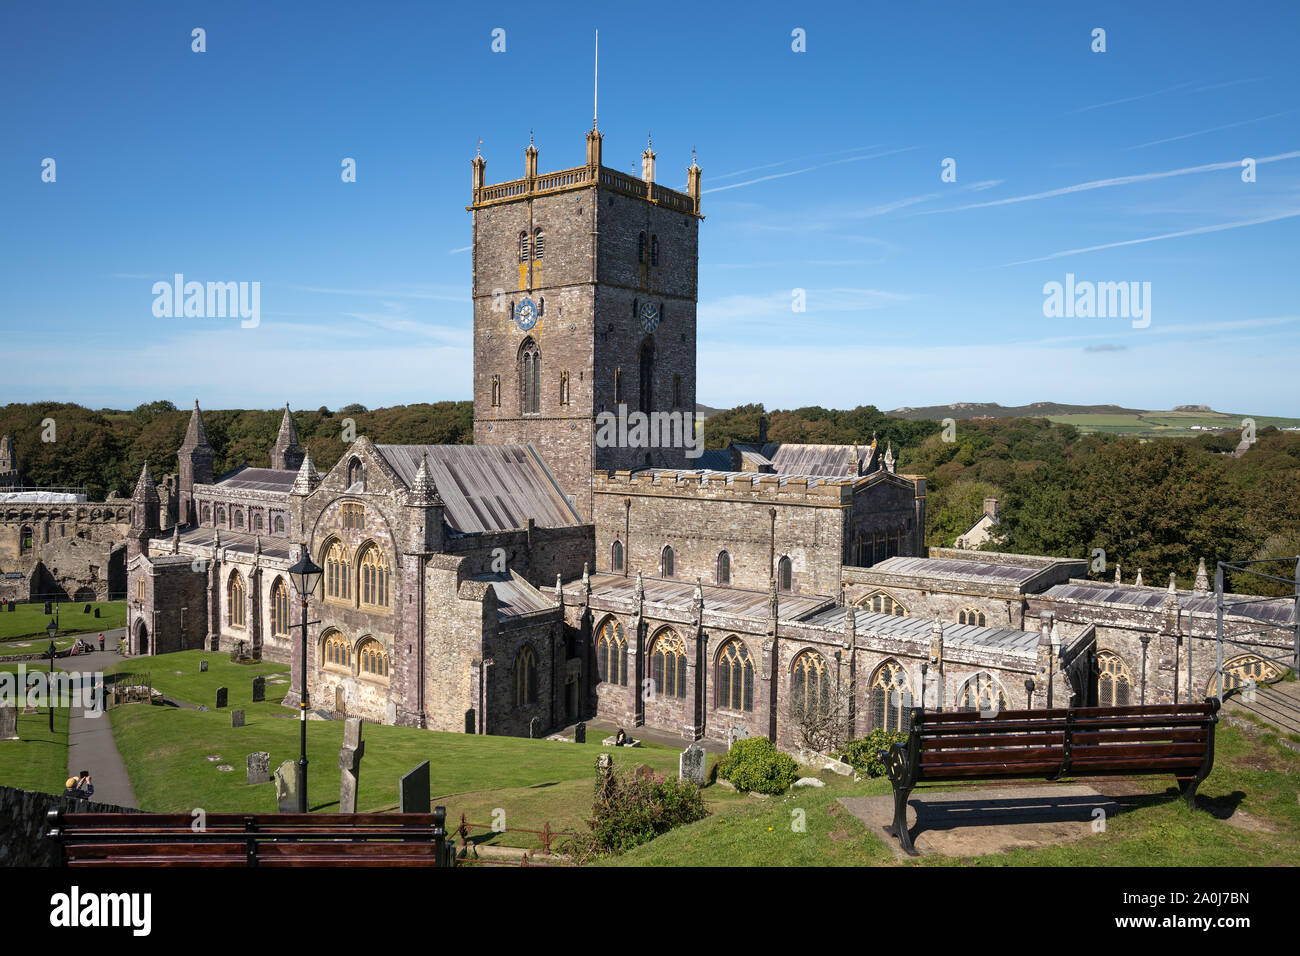 ST DAVID'S, PEMBROKESHIRE/UK - 13. SEPTEMBER: Blick auf die Kathedrale von St. David's in Pembrokeshire am 13. September 2019. Unidentied Menschen Stockfoto